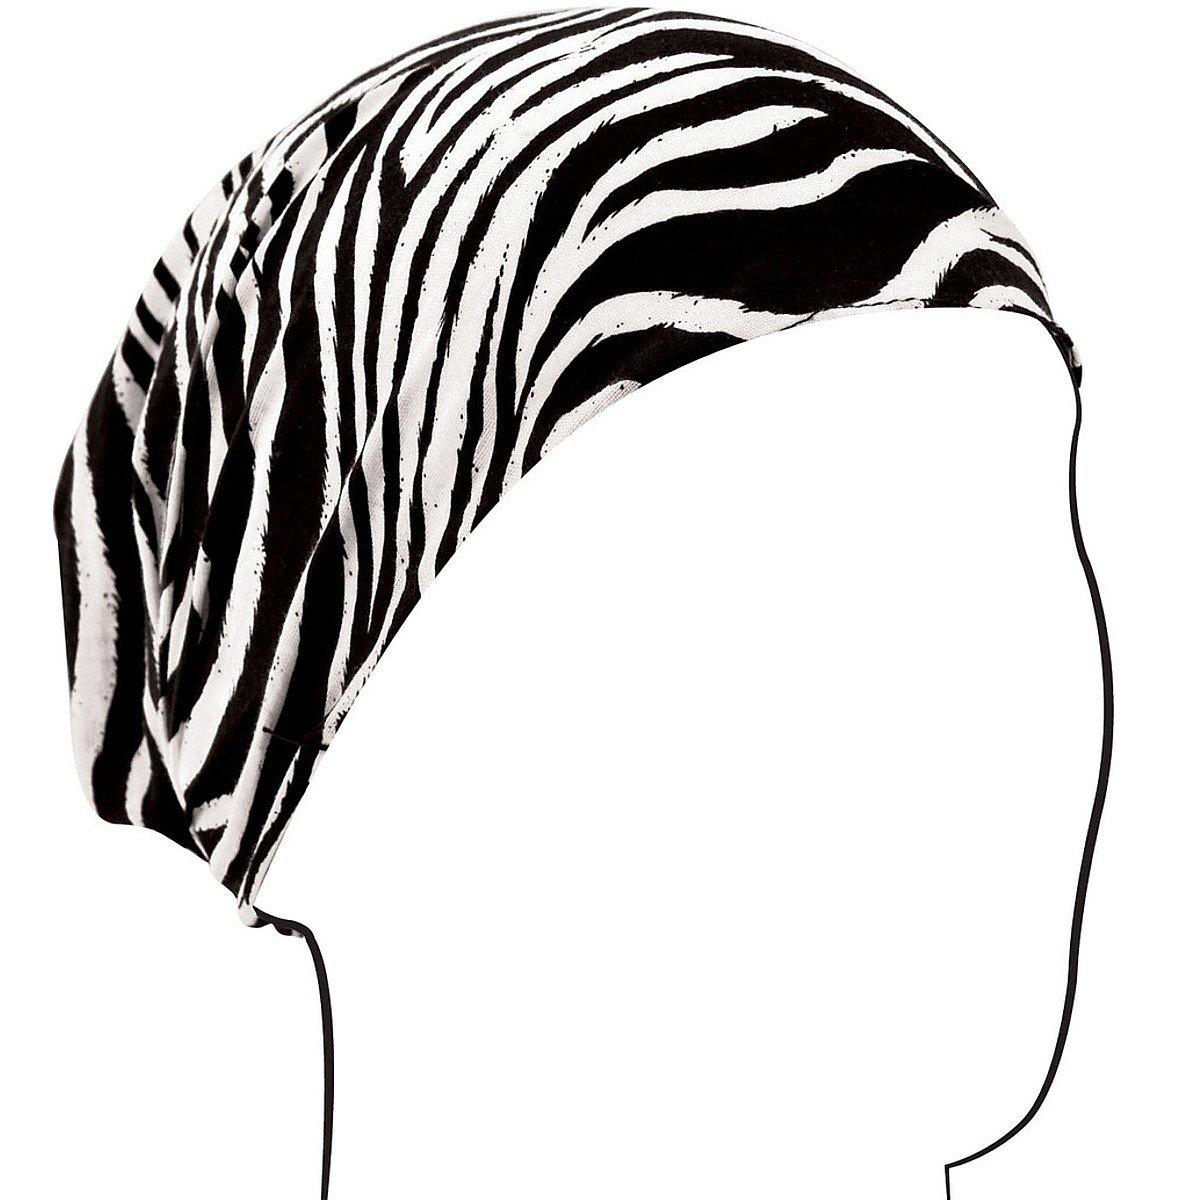 ZANheadgear® Zebra Print Cotton Headwrap, OSFM, Black/White - American Legend Rider